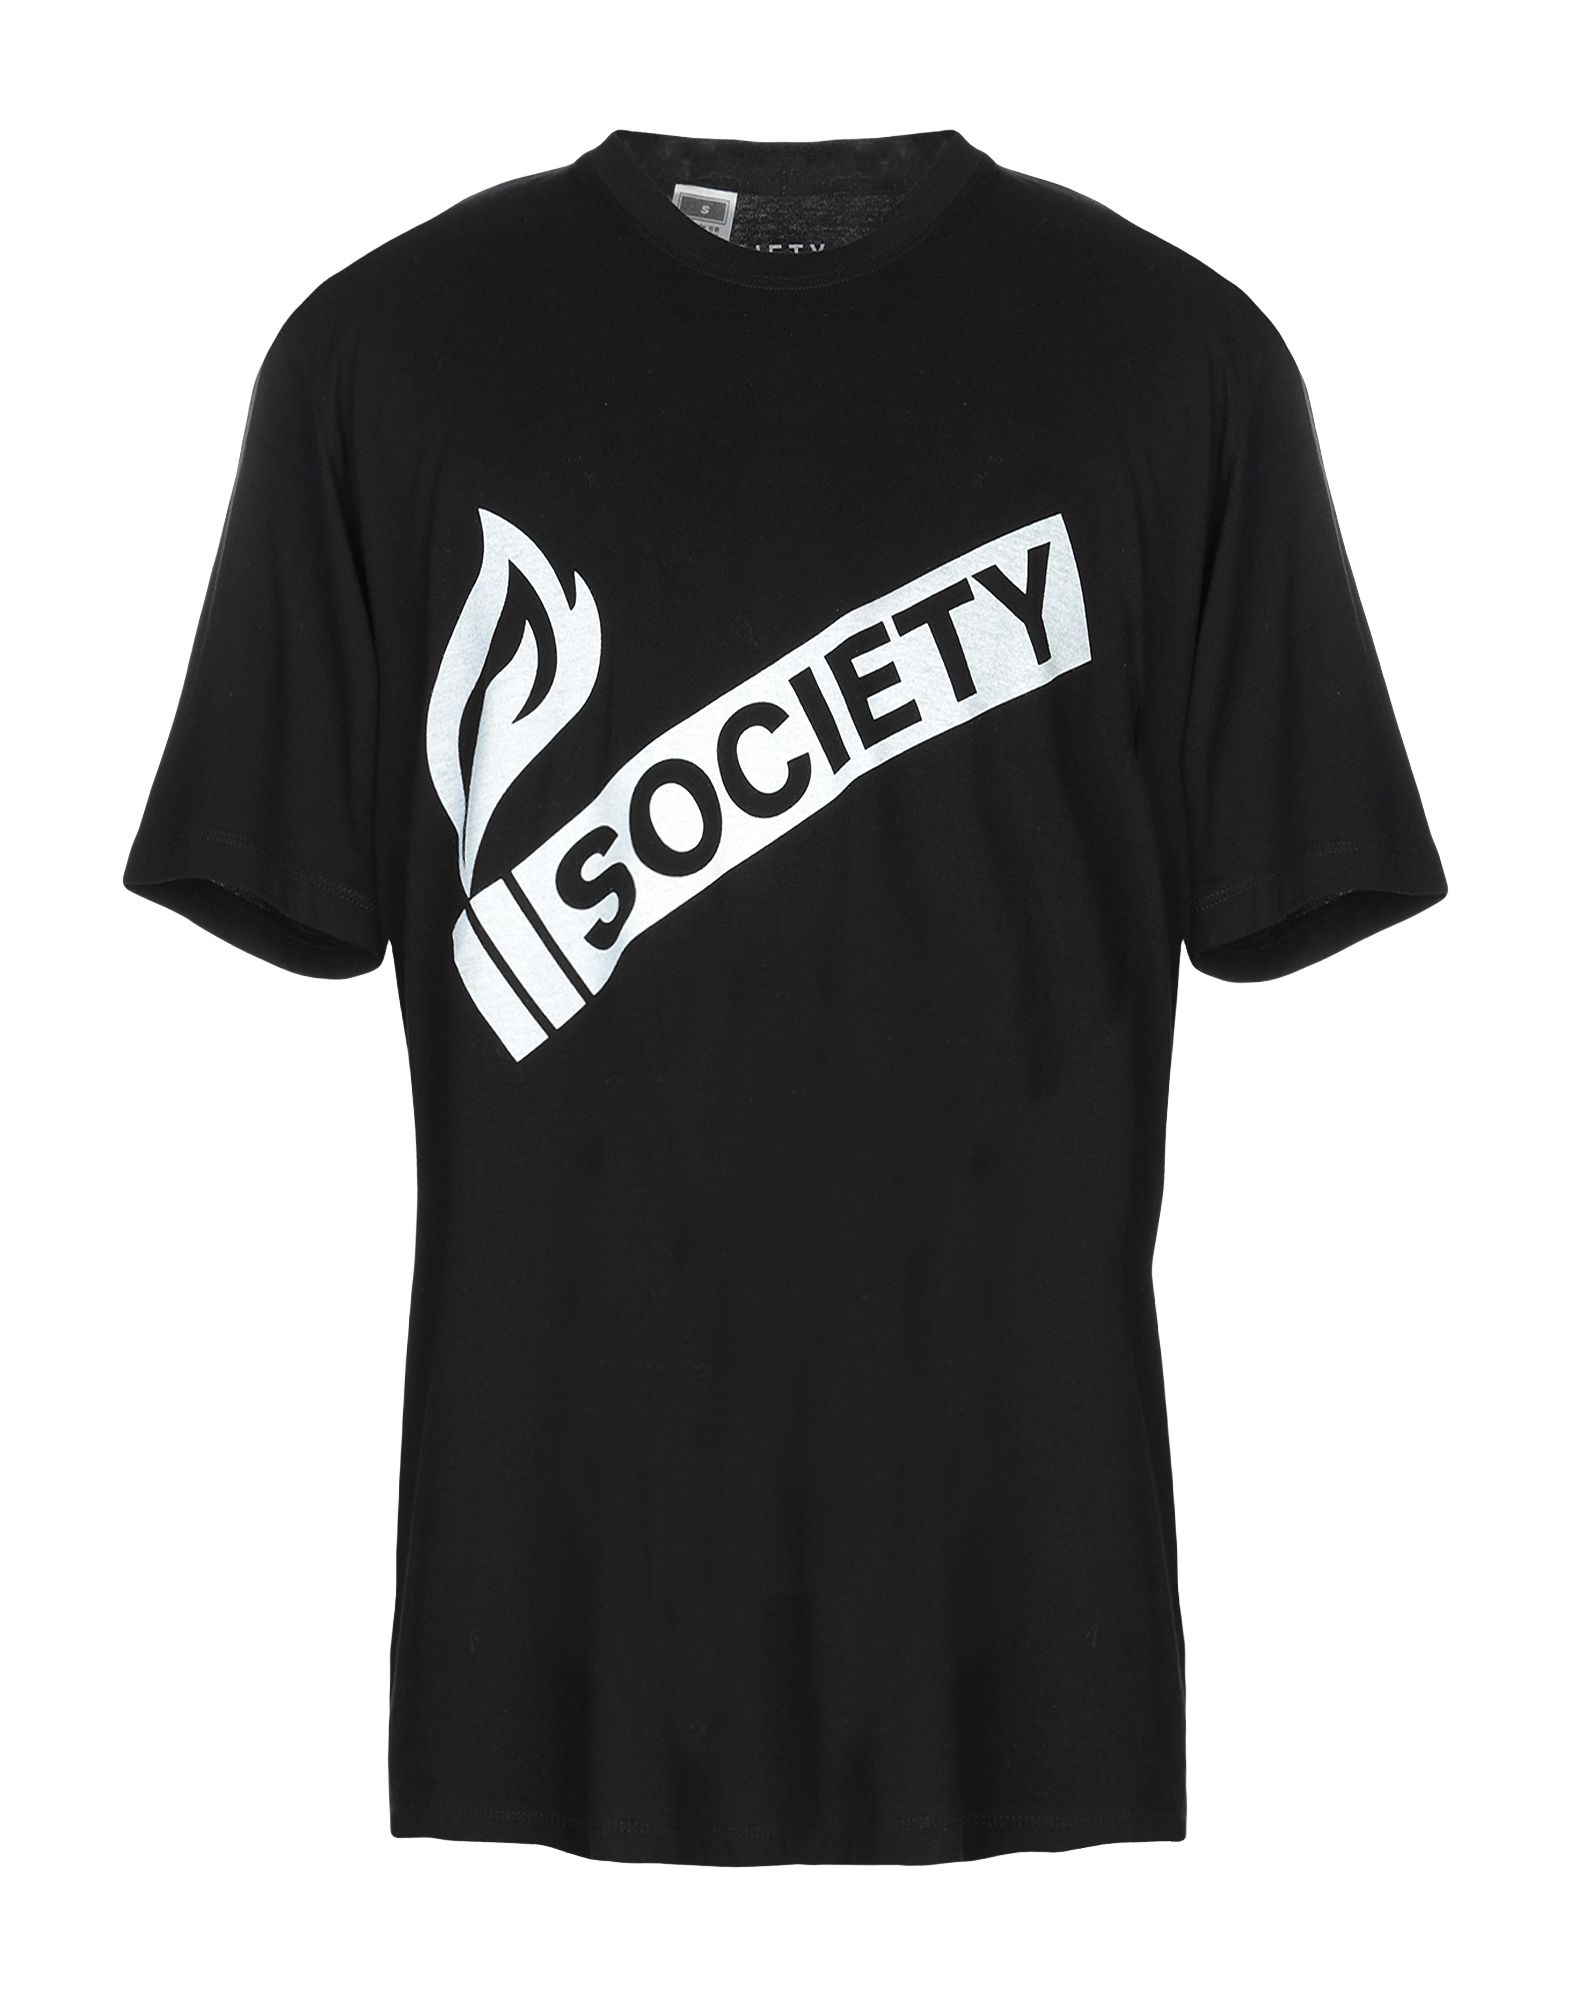 Kaotiko Society футболка. Manto peaceful violence Society футболка. SWE одежда. Society бренд одежды.